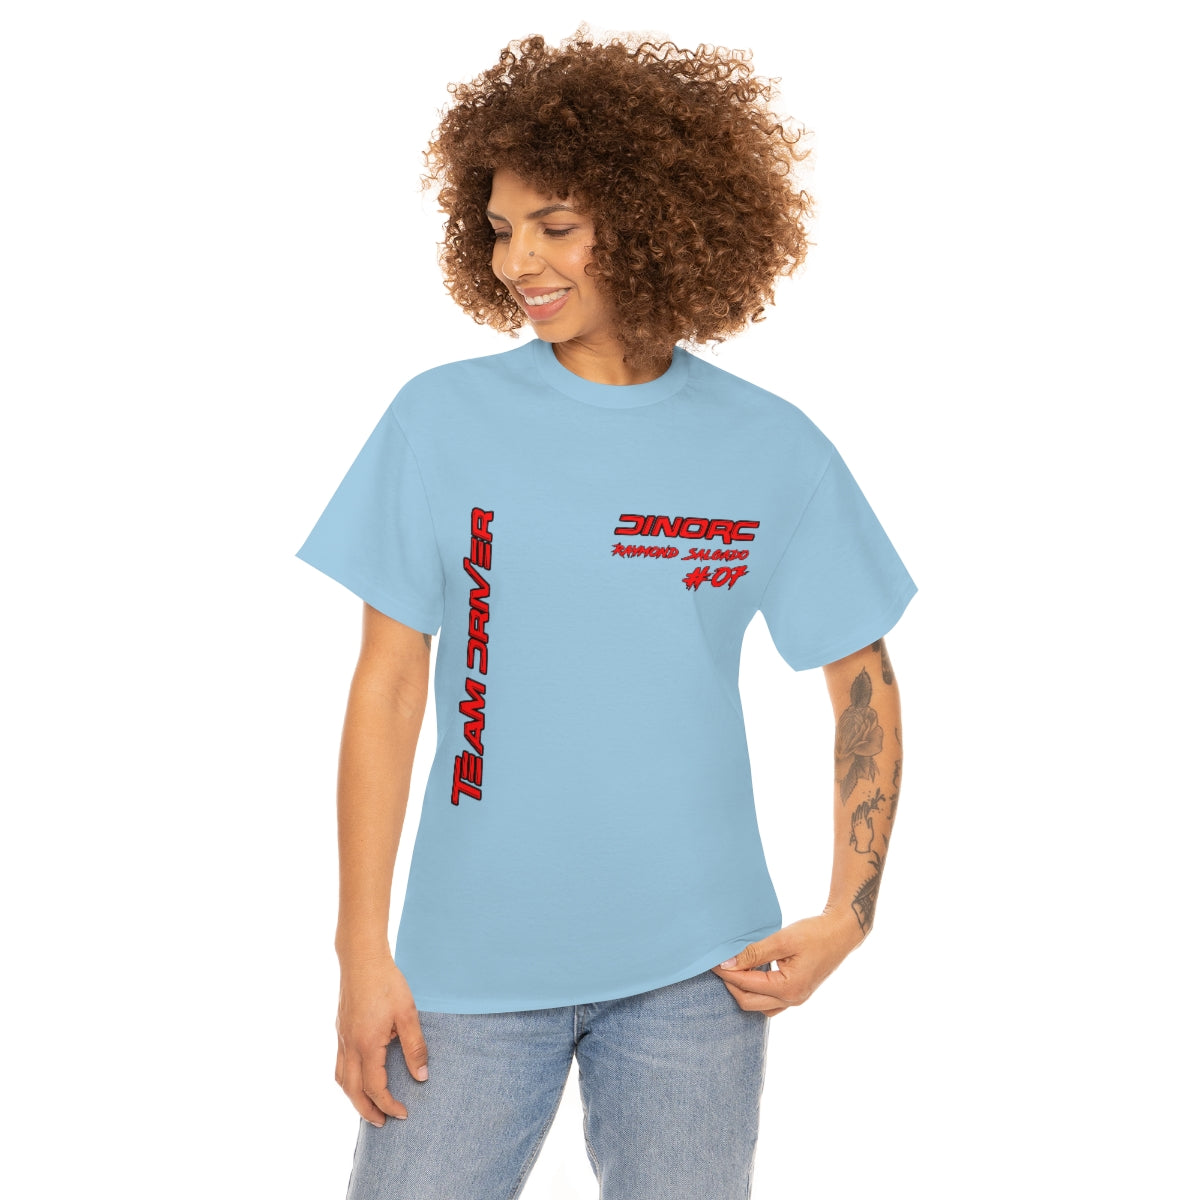 Team Driver Raymond Salgado Front and Back DinoRc Logo T-Shirt S-5x 5 colors